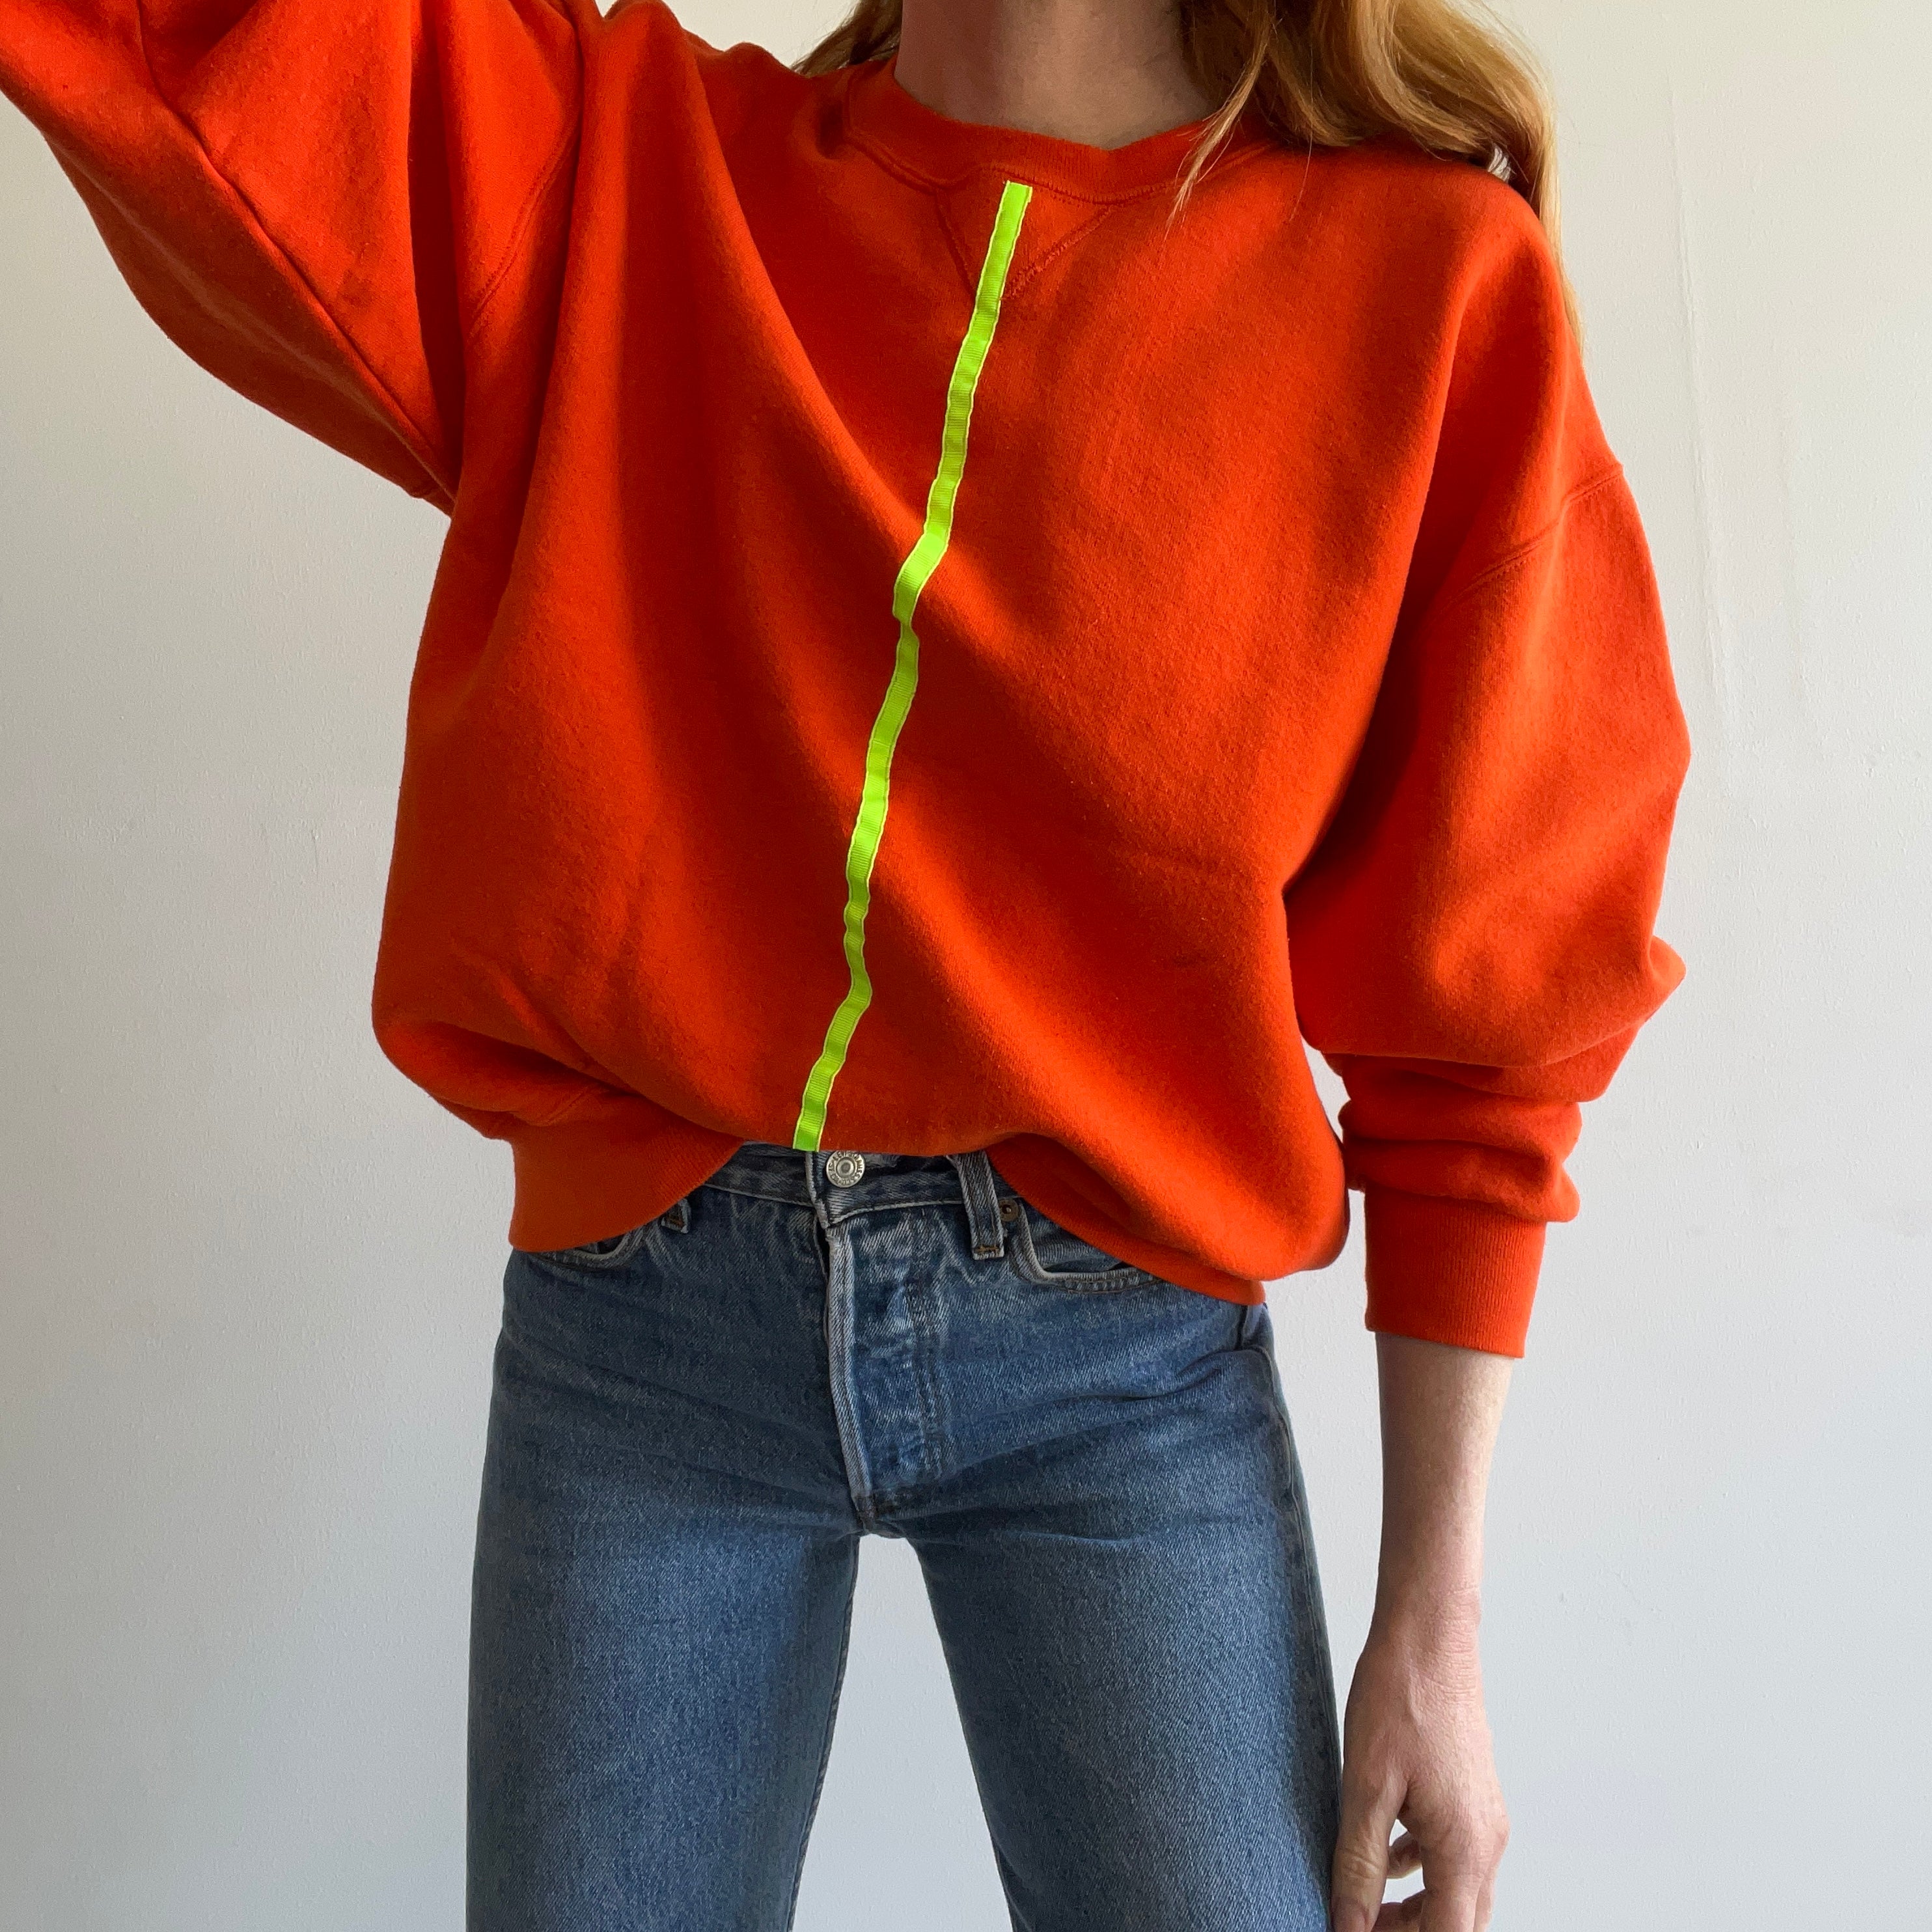 1990s DIY Orange and Neon Yellow Sweatshirt by Russell